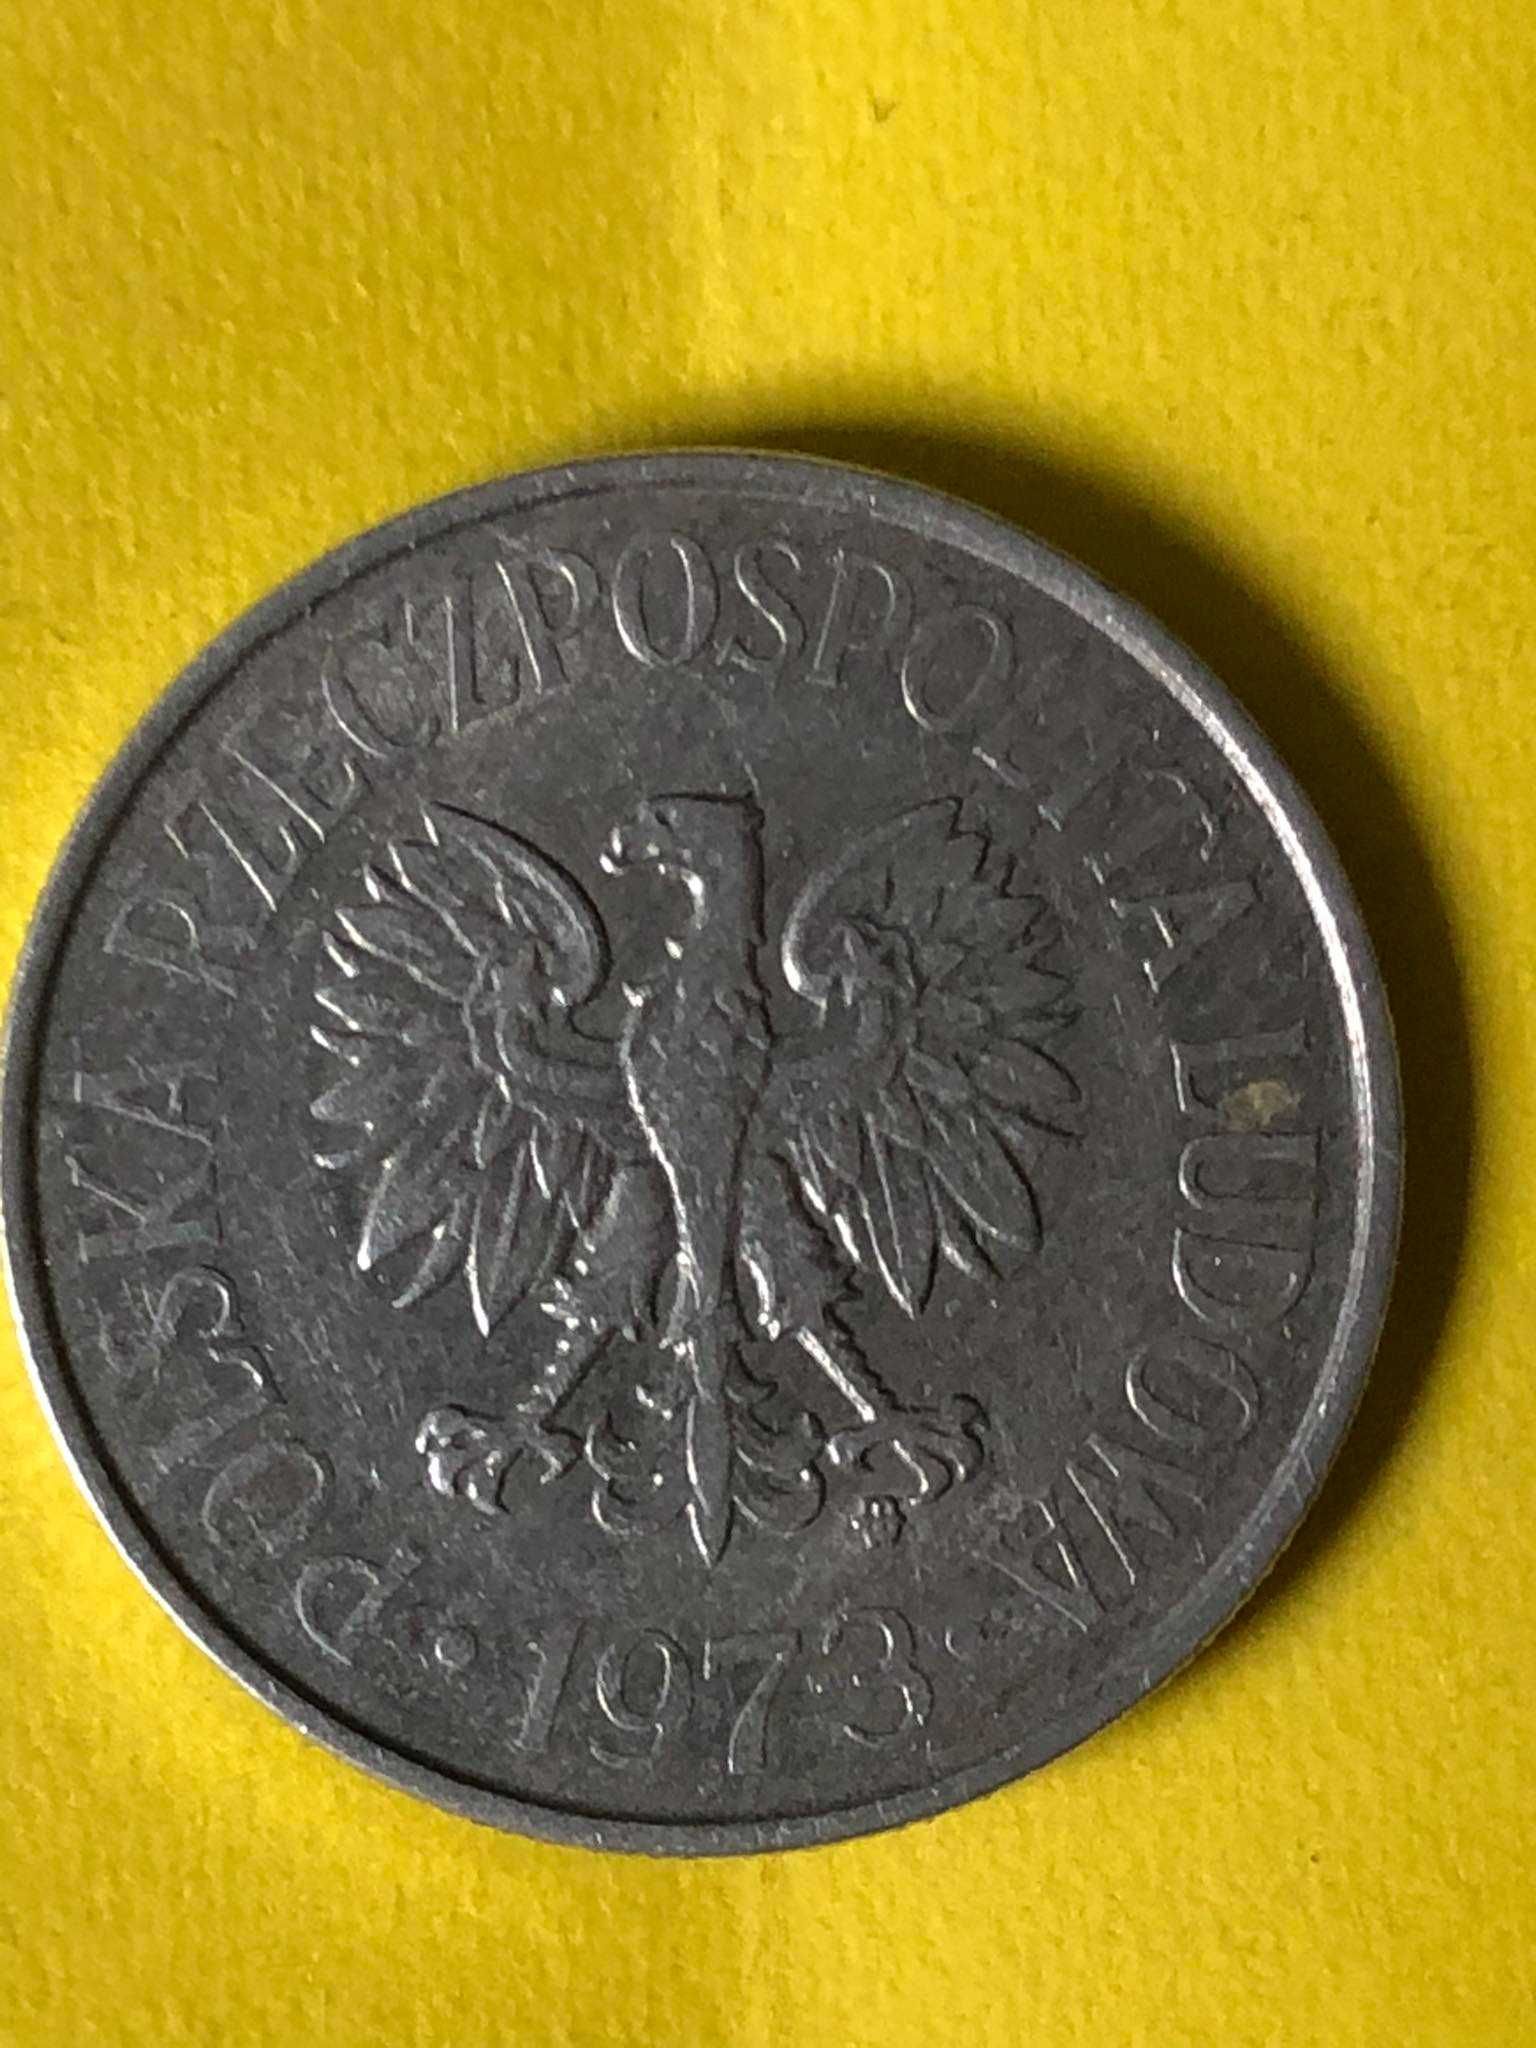 Moneta 1 zł, PRL,1973